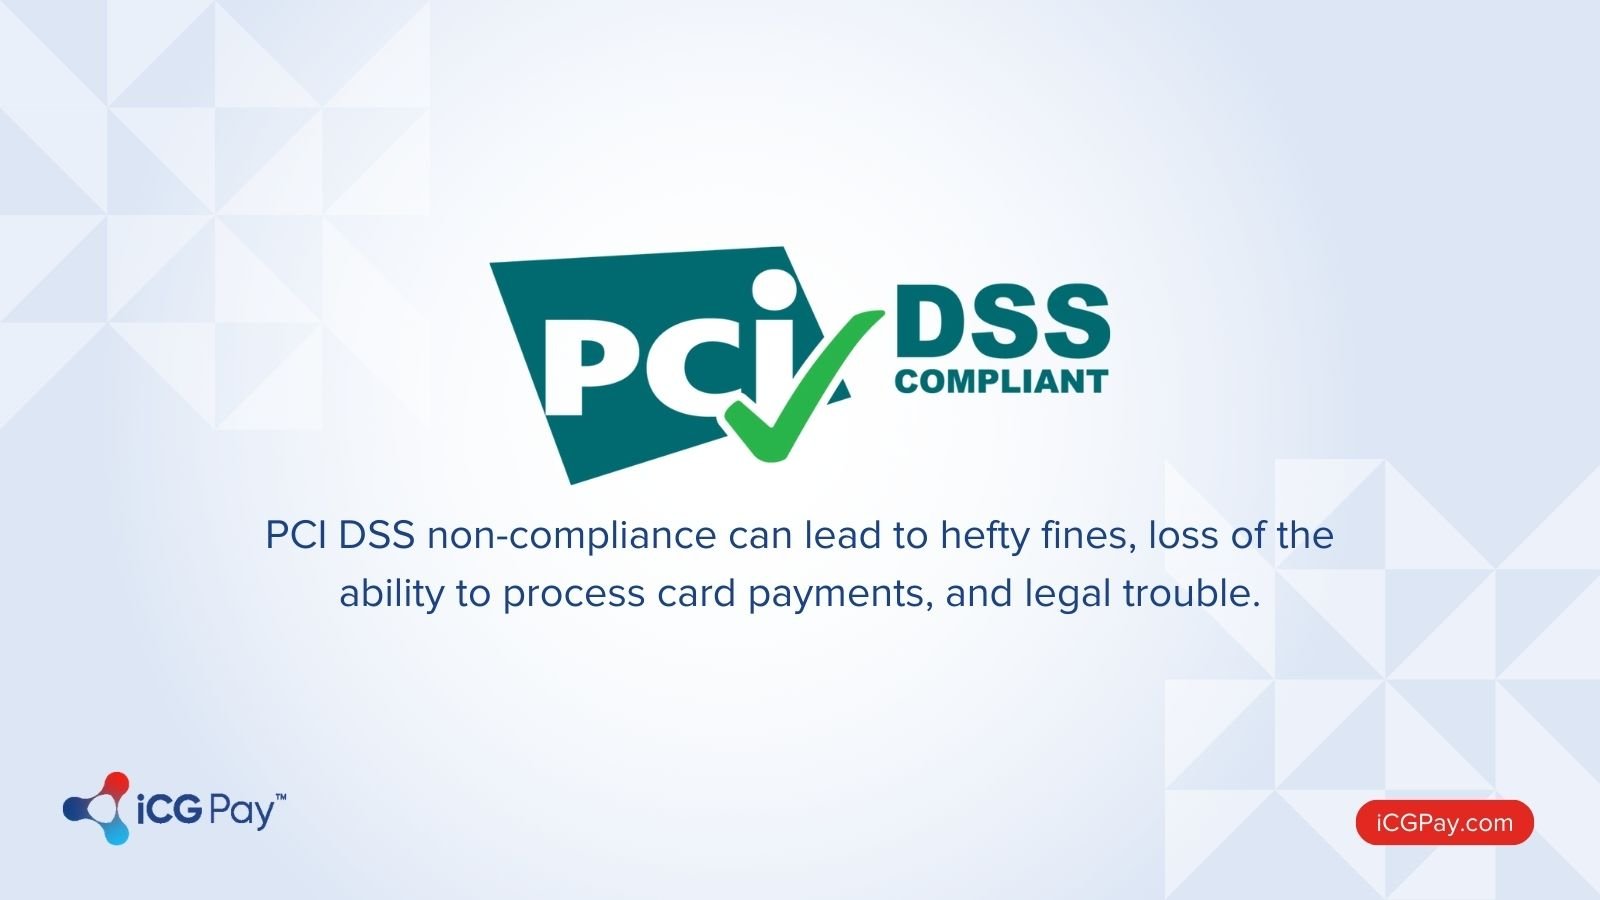 PCI DSS non-compliance